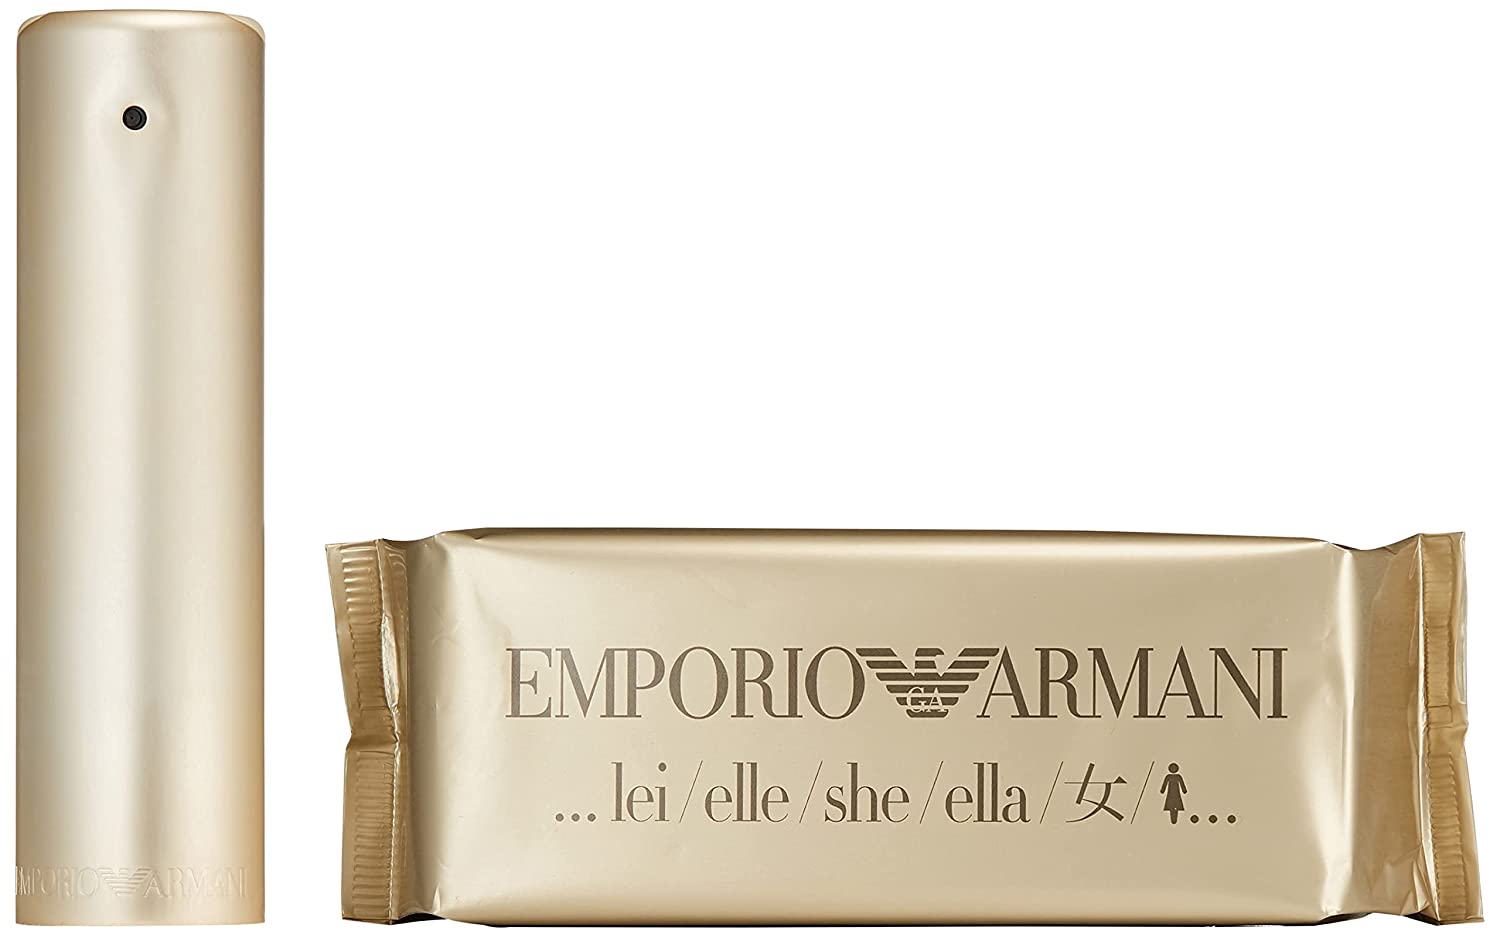 Emporio Armani She by Giorgio Armani 3.4 oz EDP Spray for Women